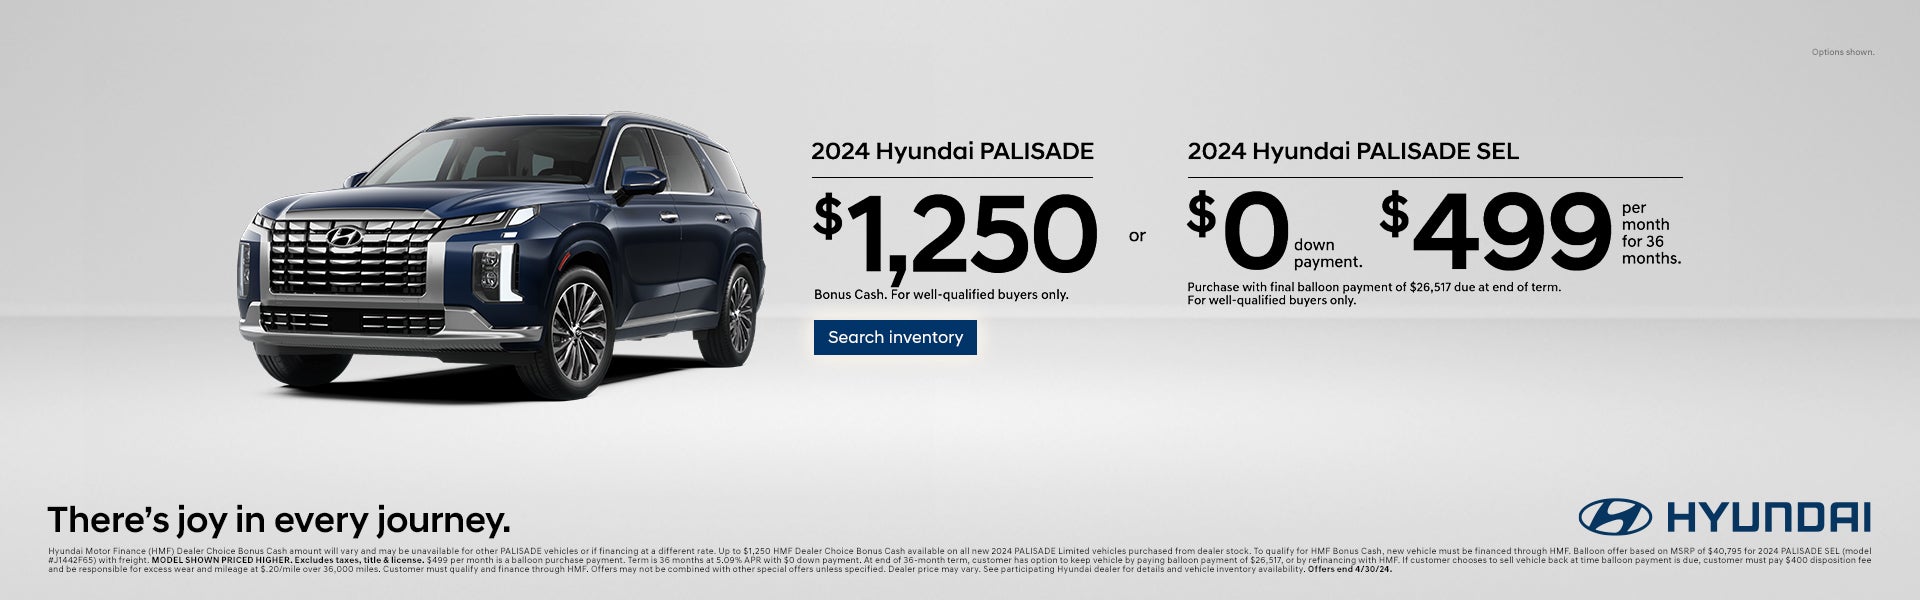 2024 Hyundai Palisade offer